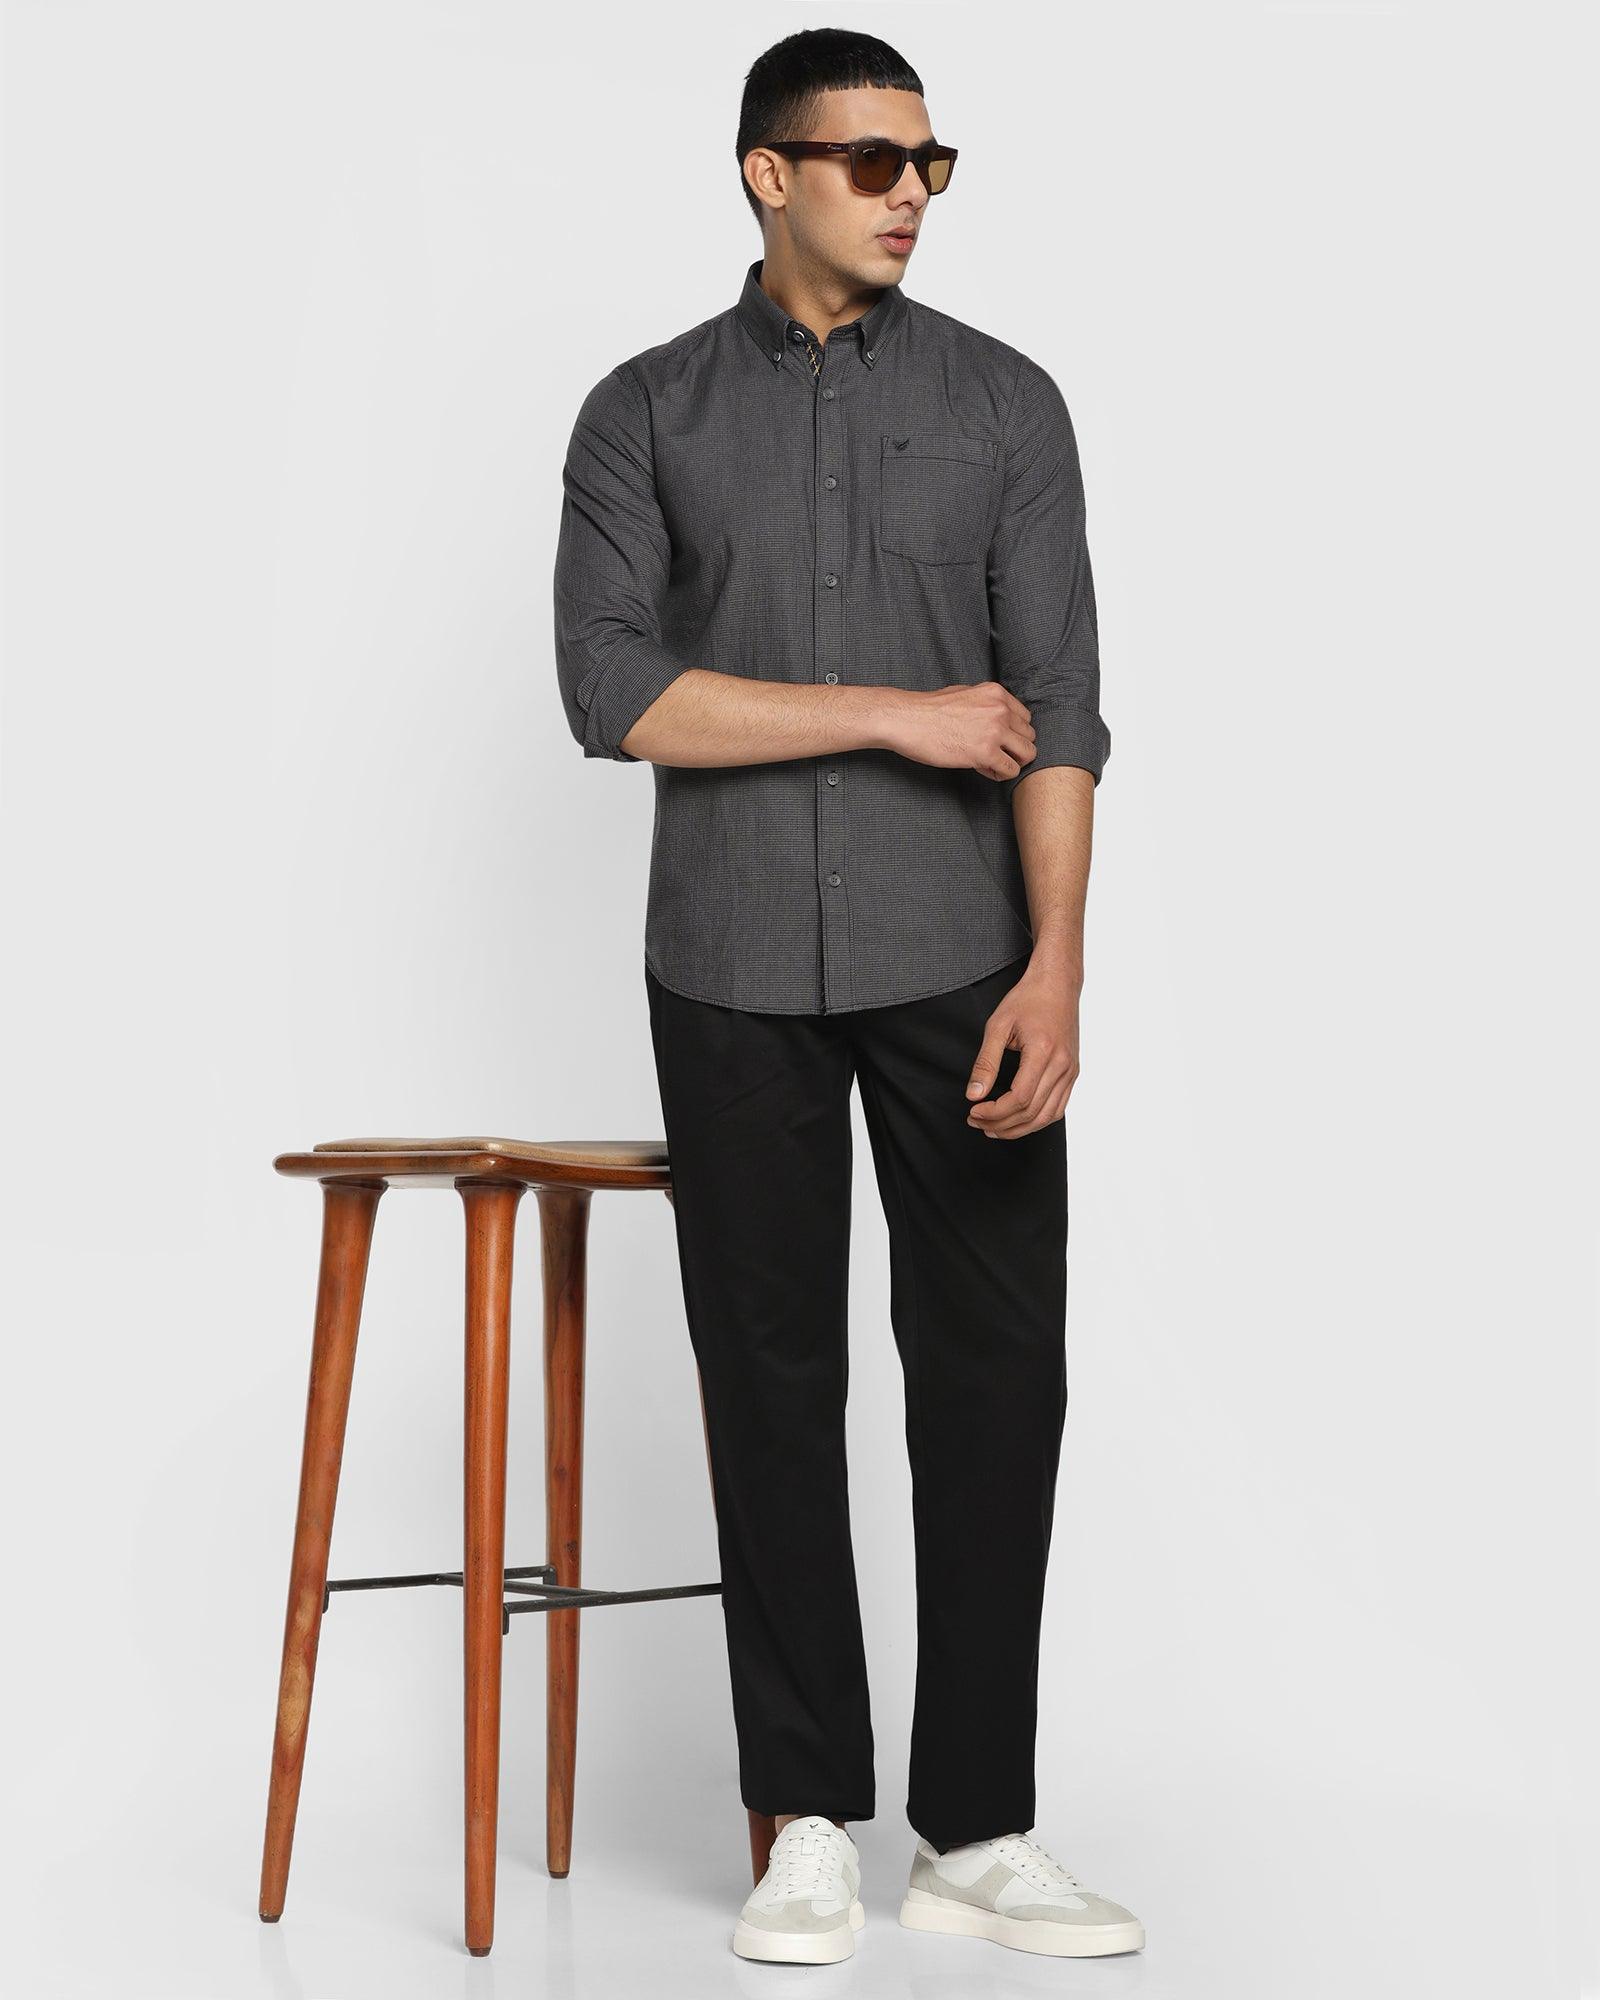 Formal Black Printed Shirt - Kellen